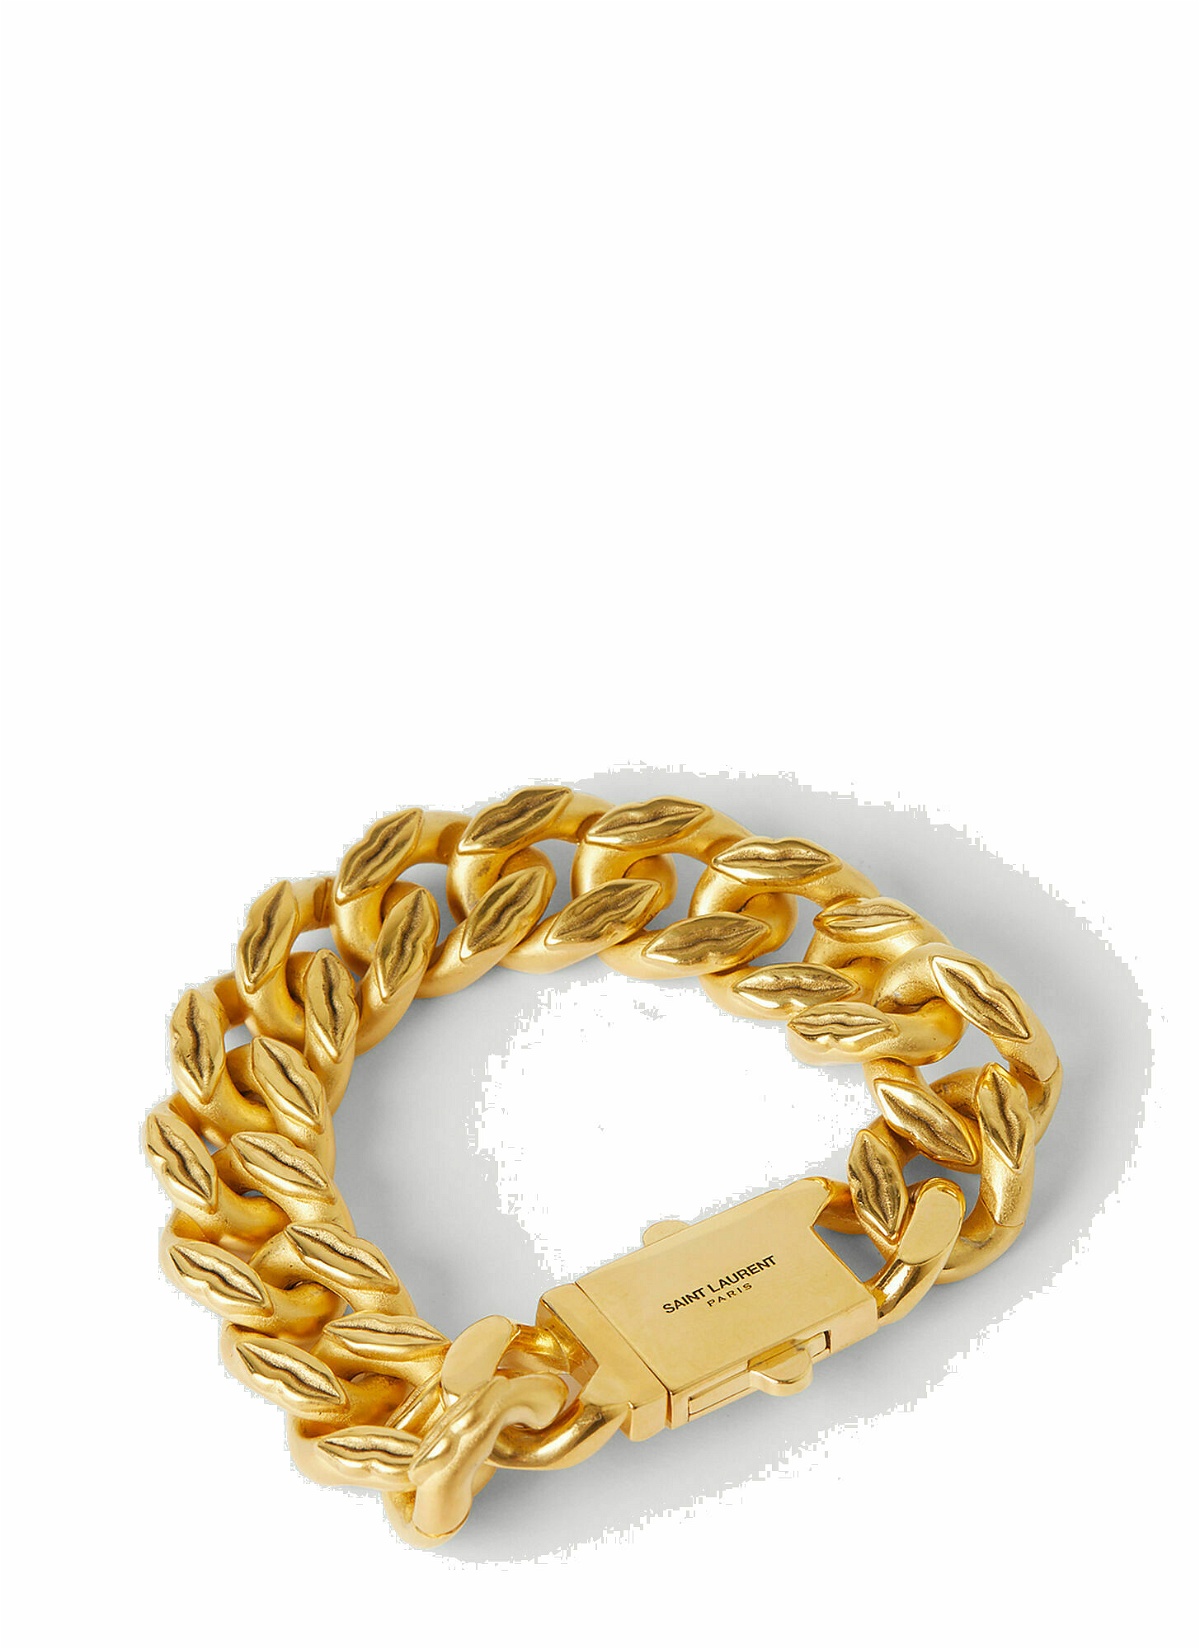 Saint Laurent Monogram Charm Bracelet Gold 16.5-19.5cm Free Shipping